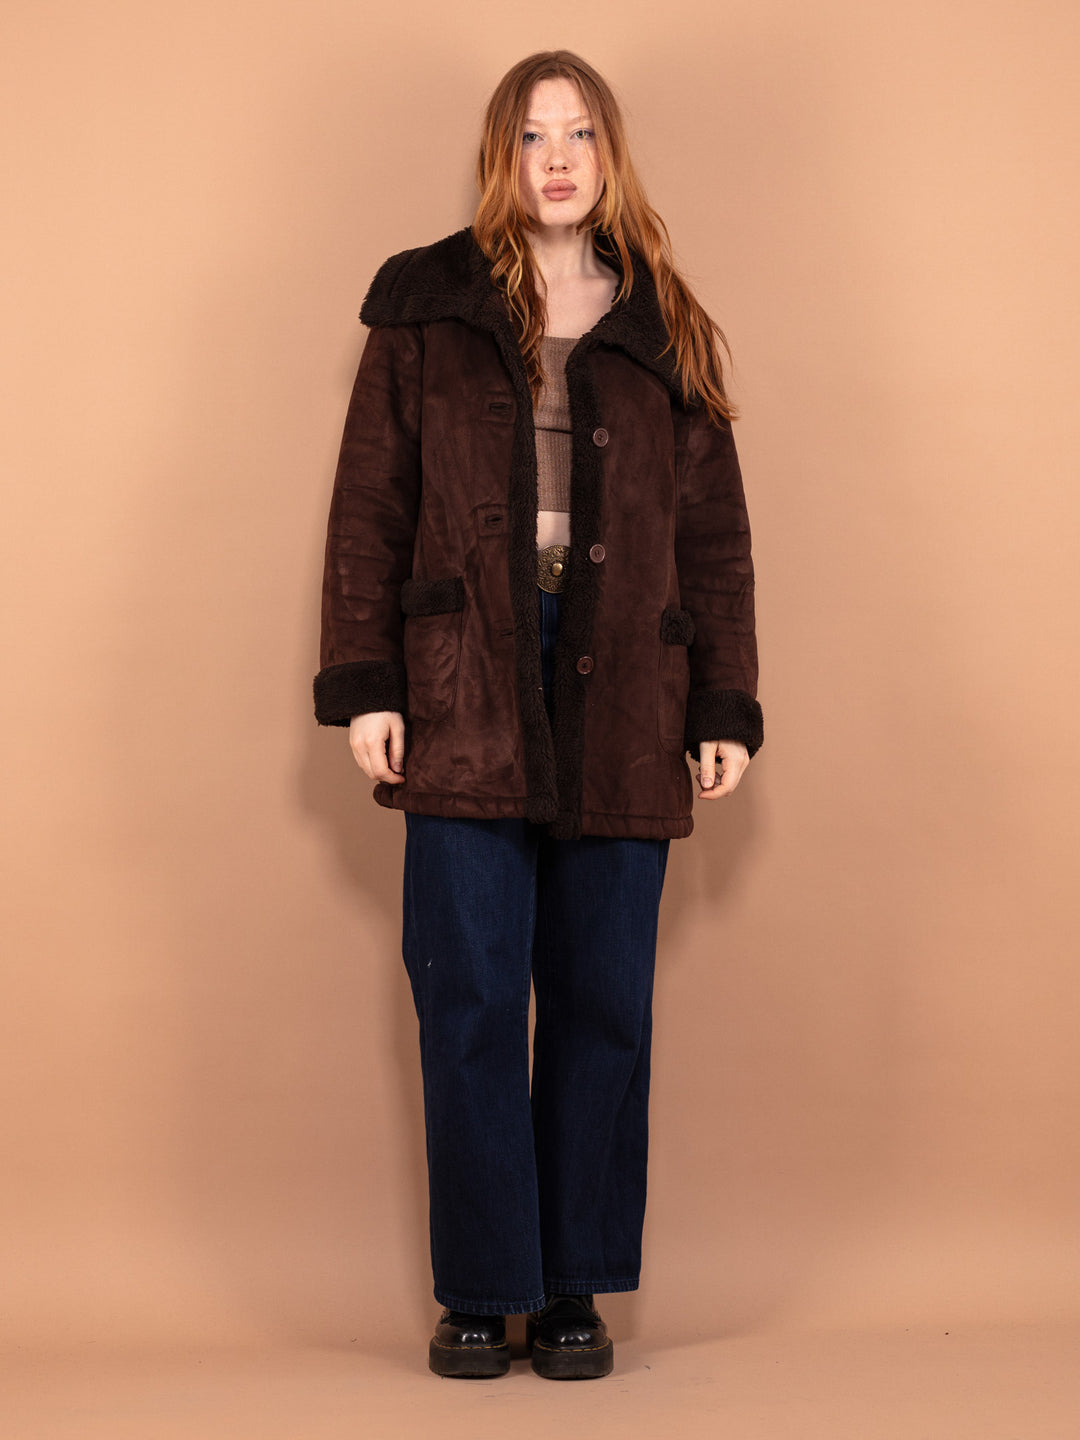 90s Faux Sheepskin Coat, Size L Large, Dark Brown Vintage Sherpa Coat, Oversized Women Jacket, Button Up Warm Spring Coat, Outerwear